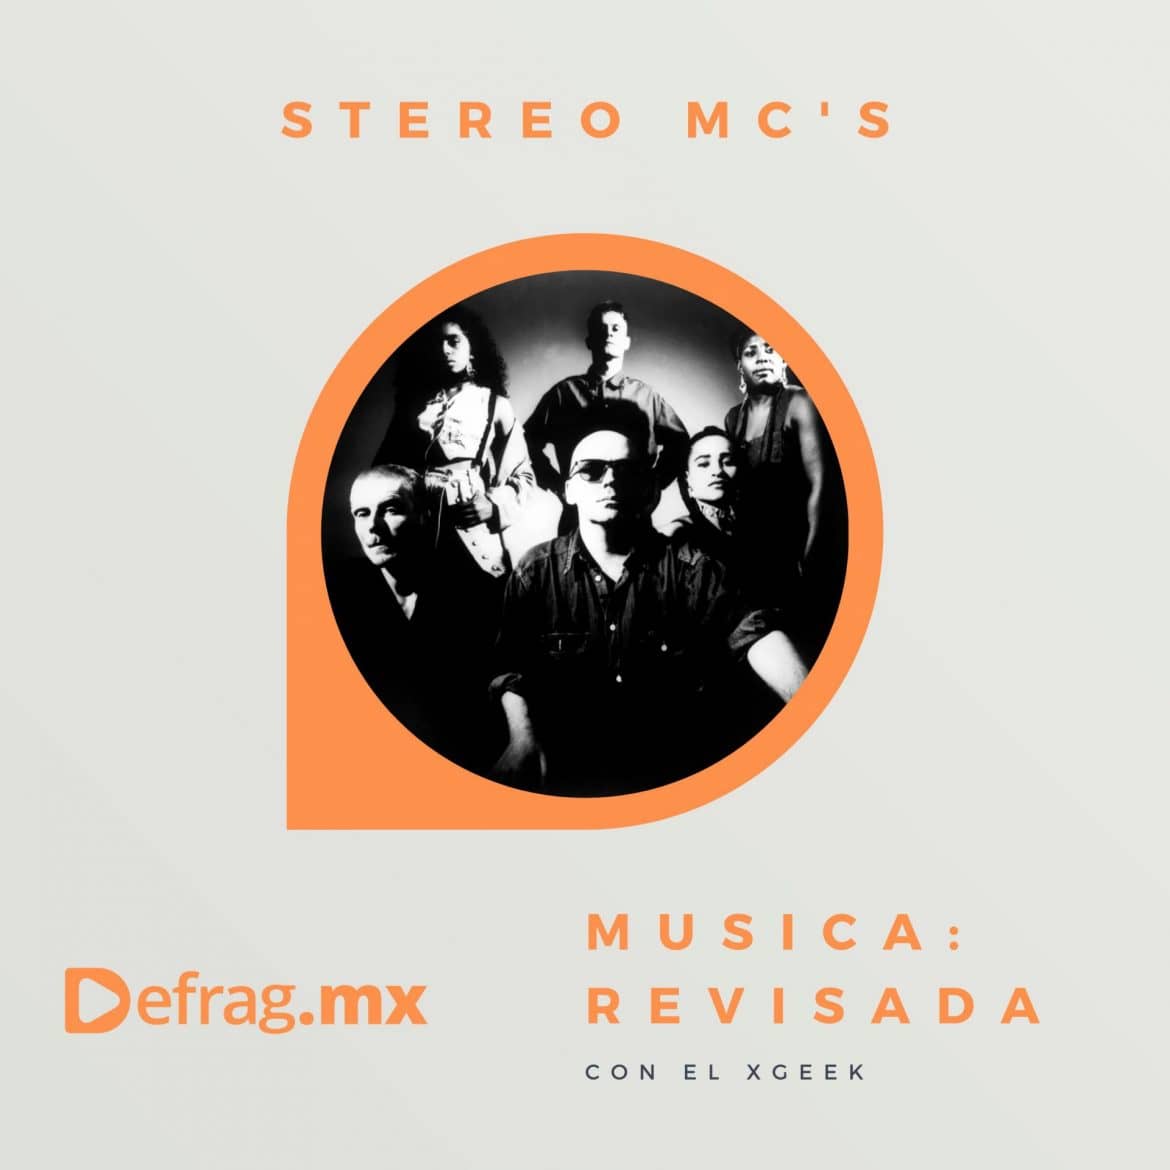 Defrag.mx Podcast Música Revisada Stereo MC's Connected